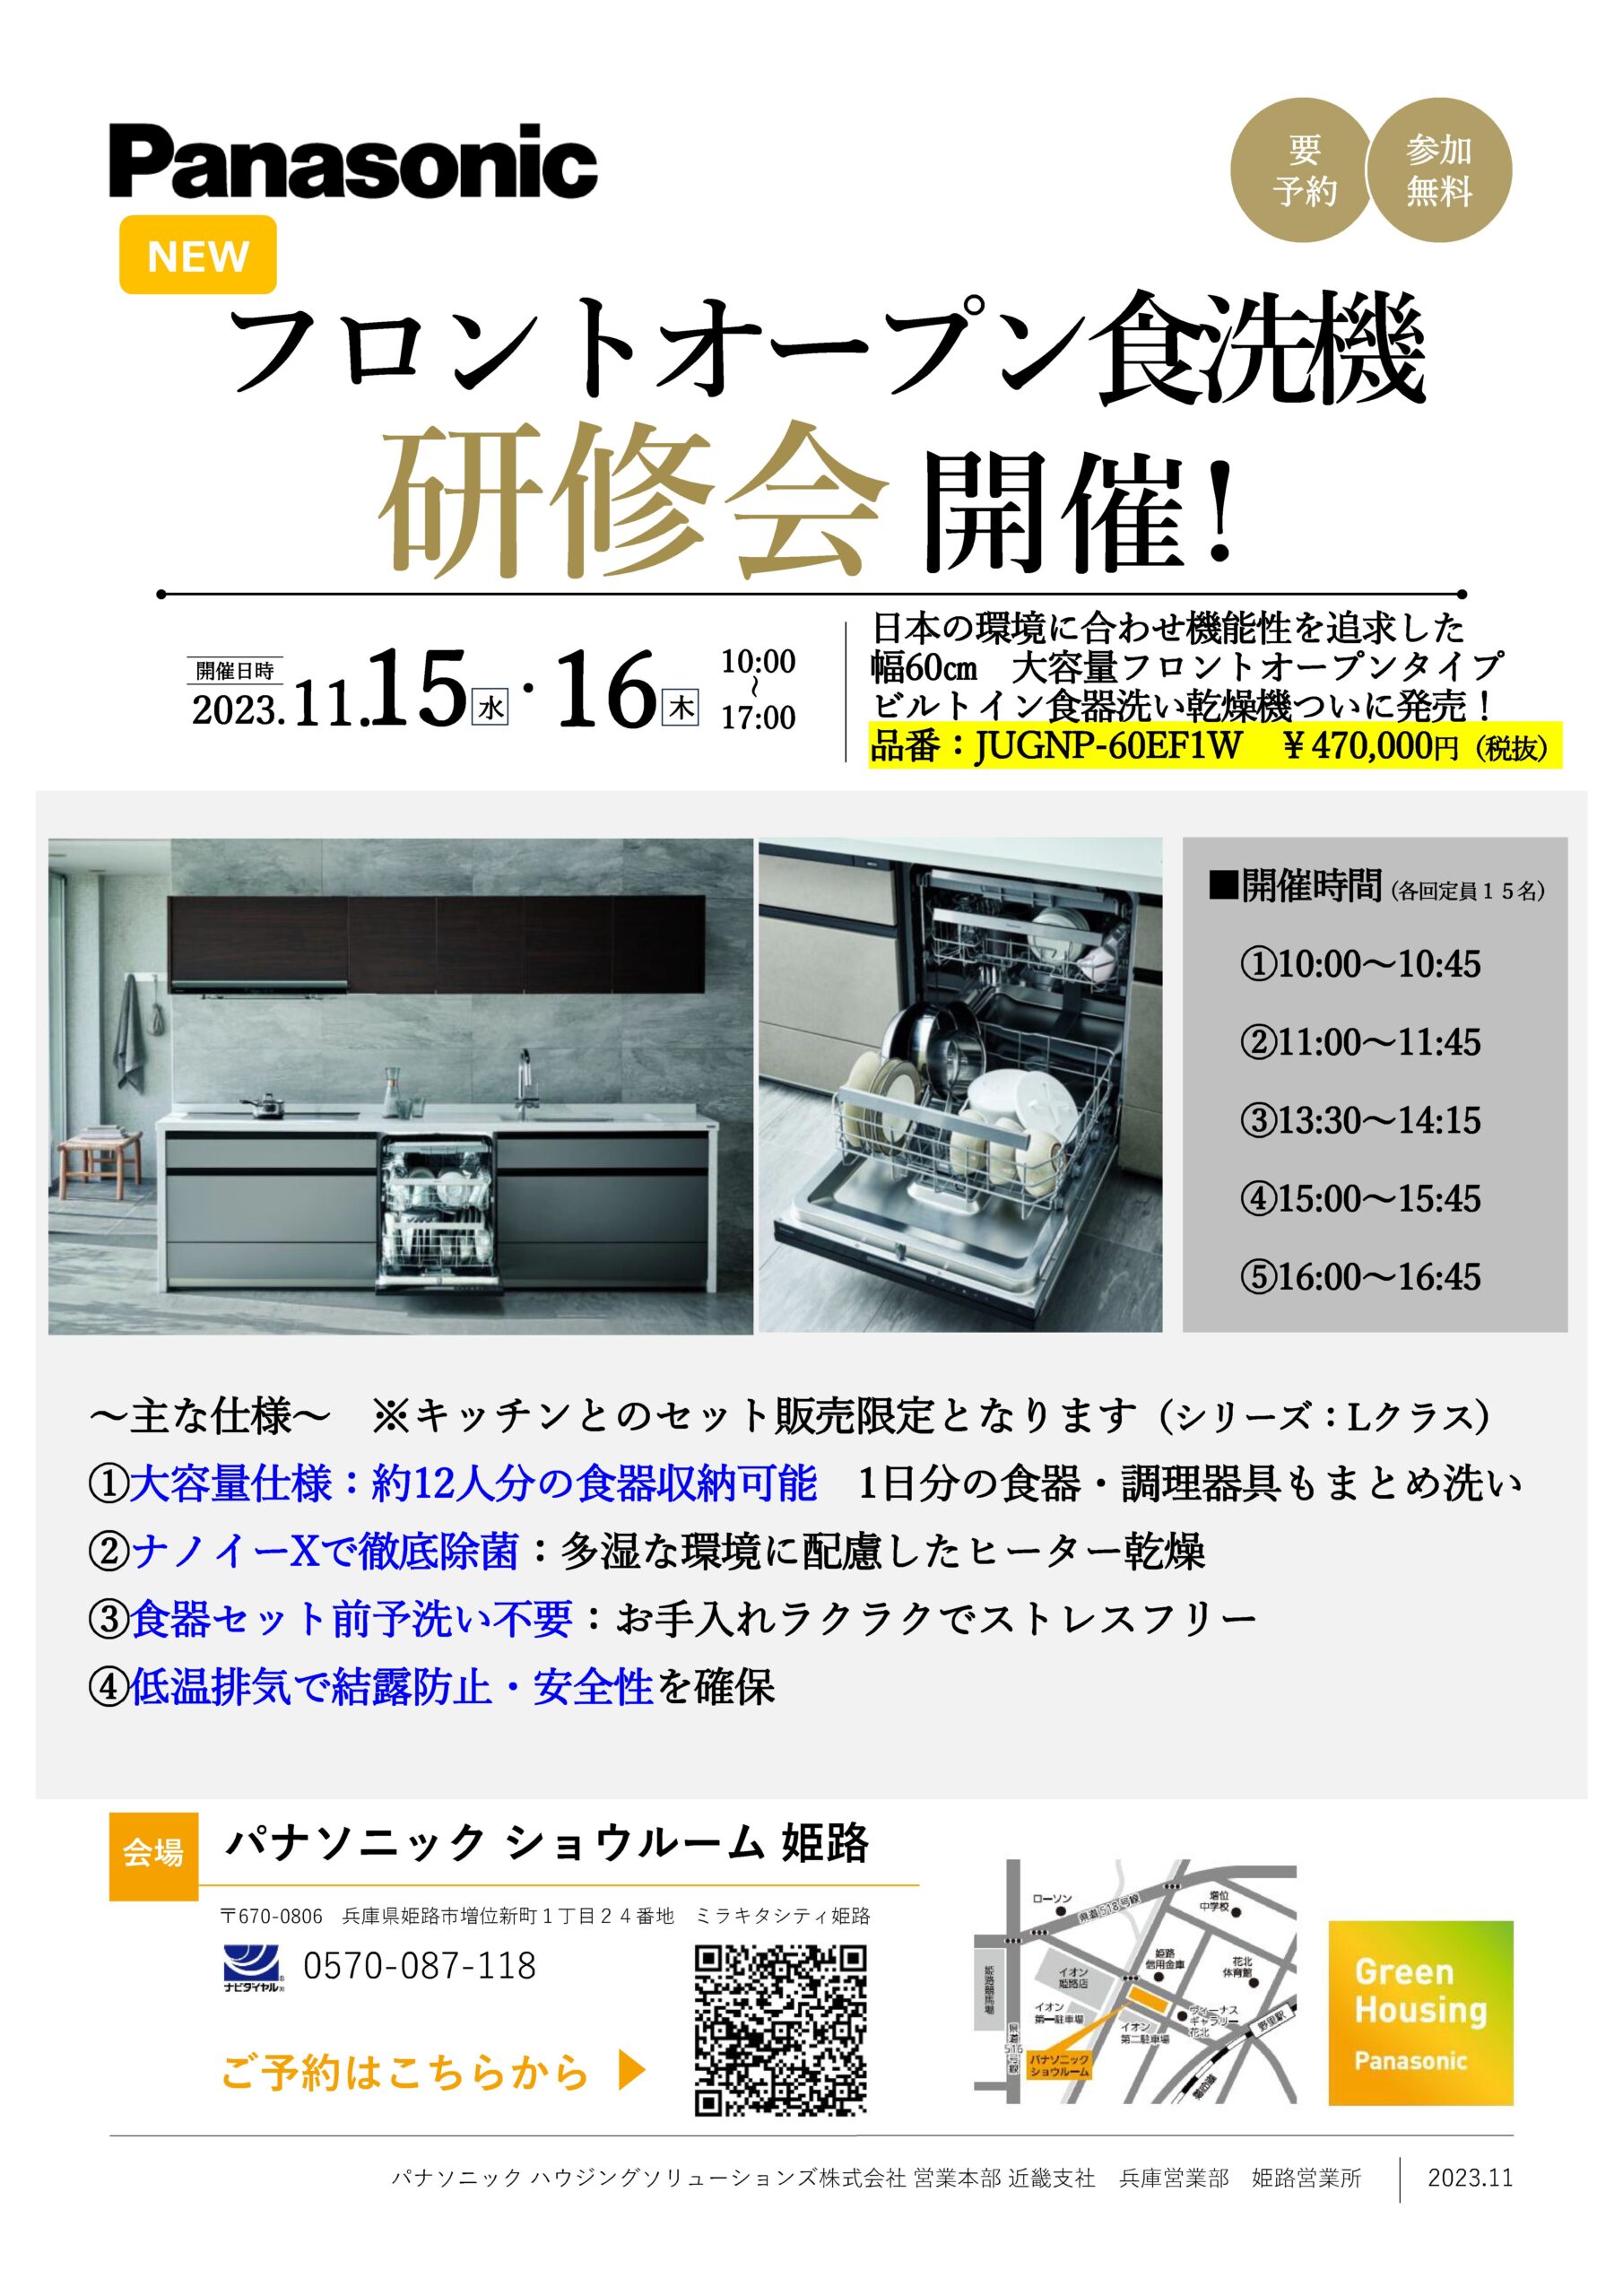 【Panasonic】フロントオープン食洗機研修会のご案内